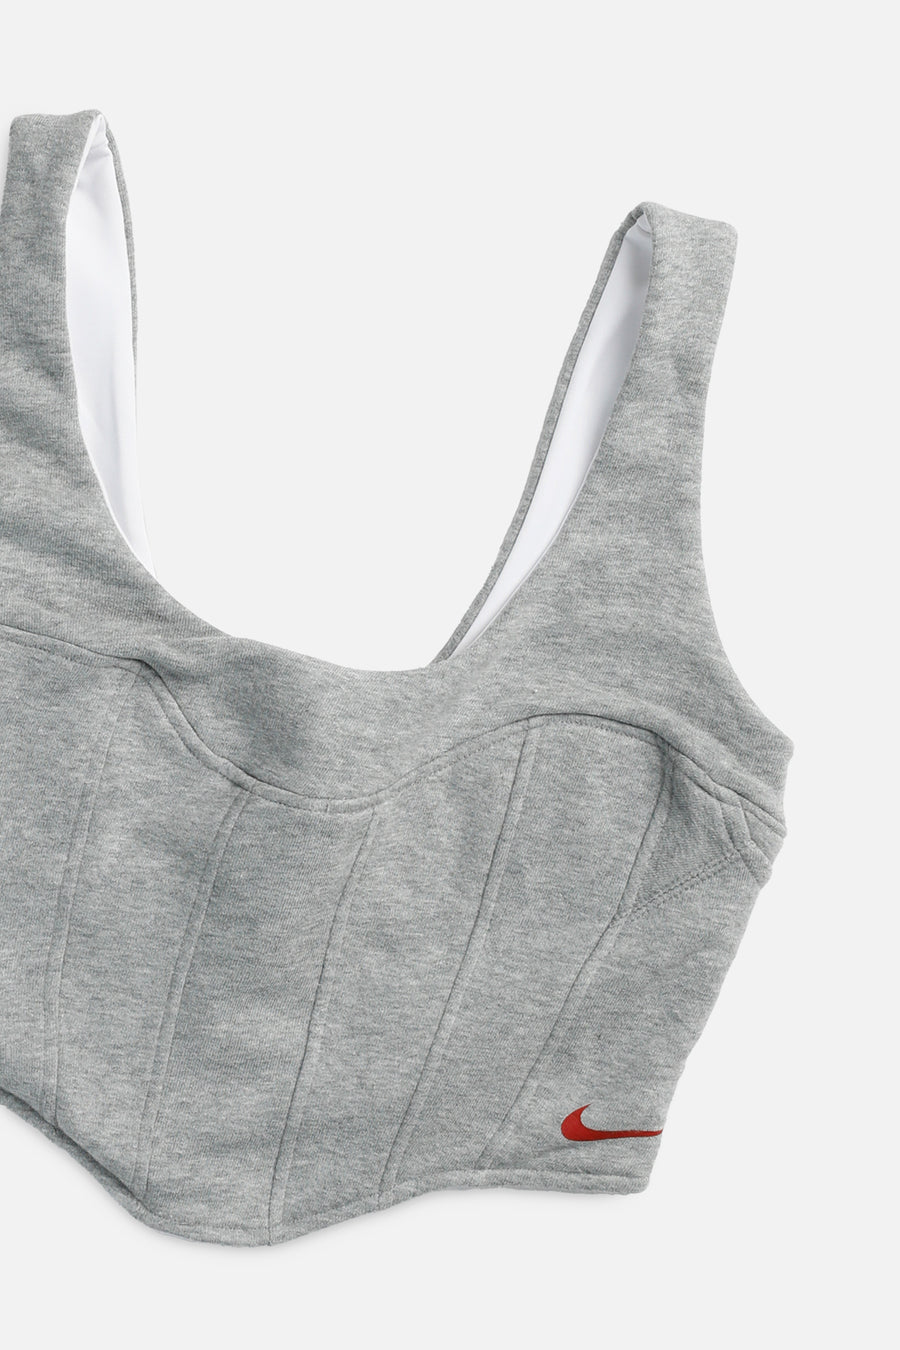 Rework Nike Sweatshirt Bustier - M